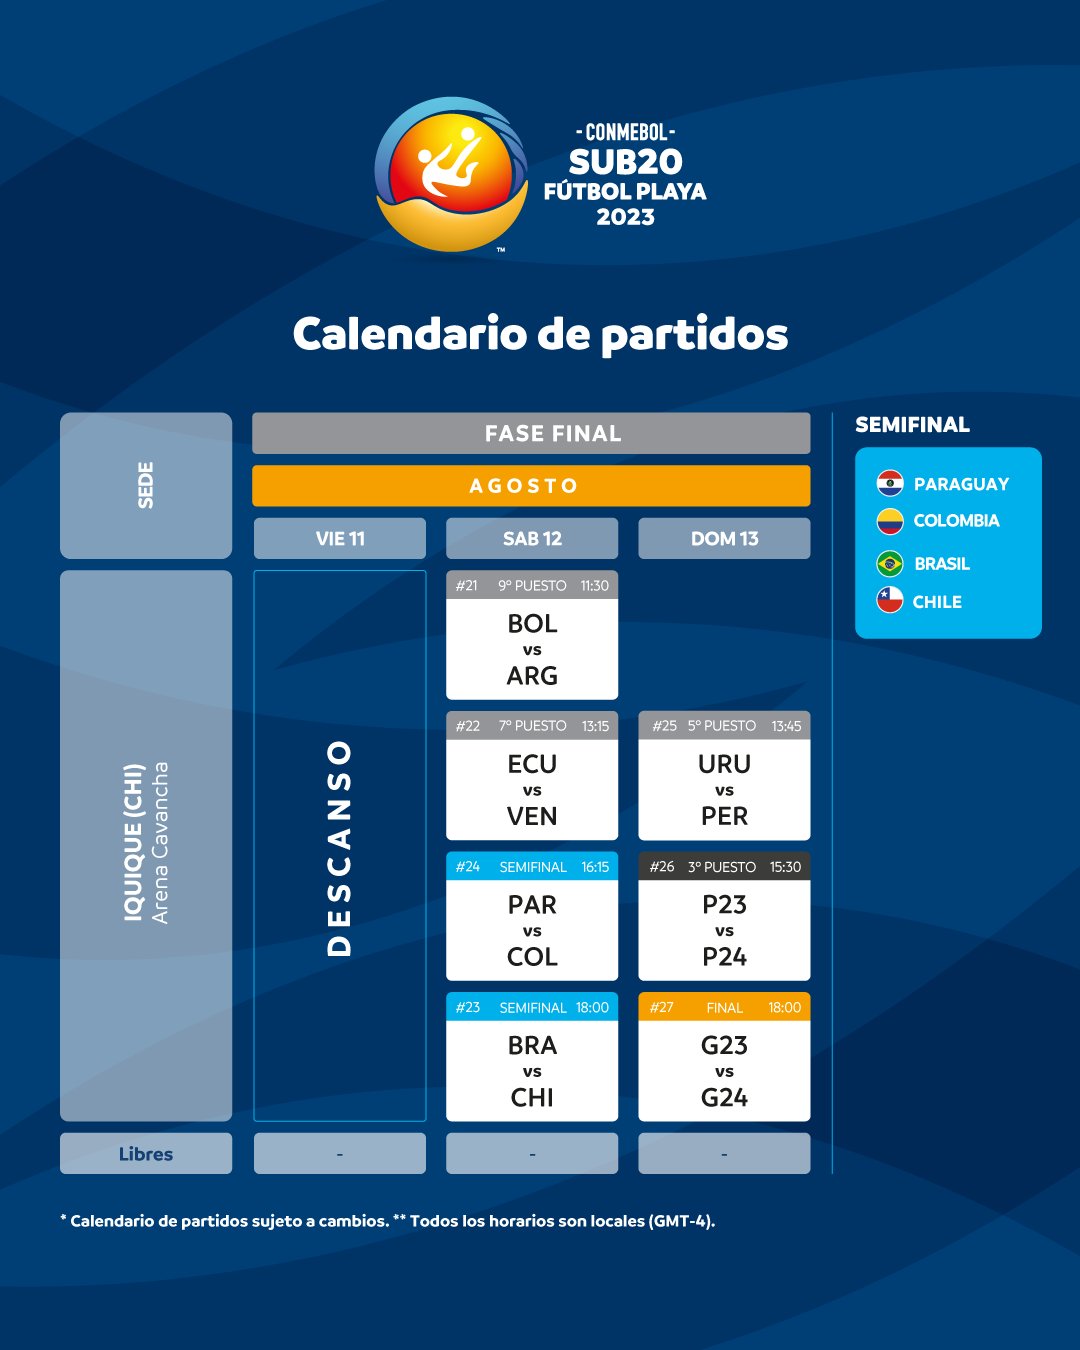 CONMEBOL.com on X: ¡A tomar nota! Así se jugará la Fase Final de